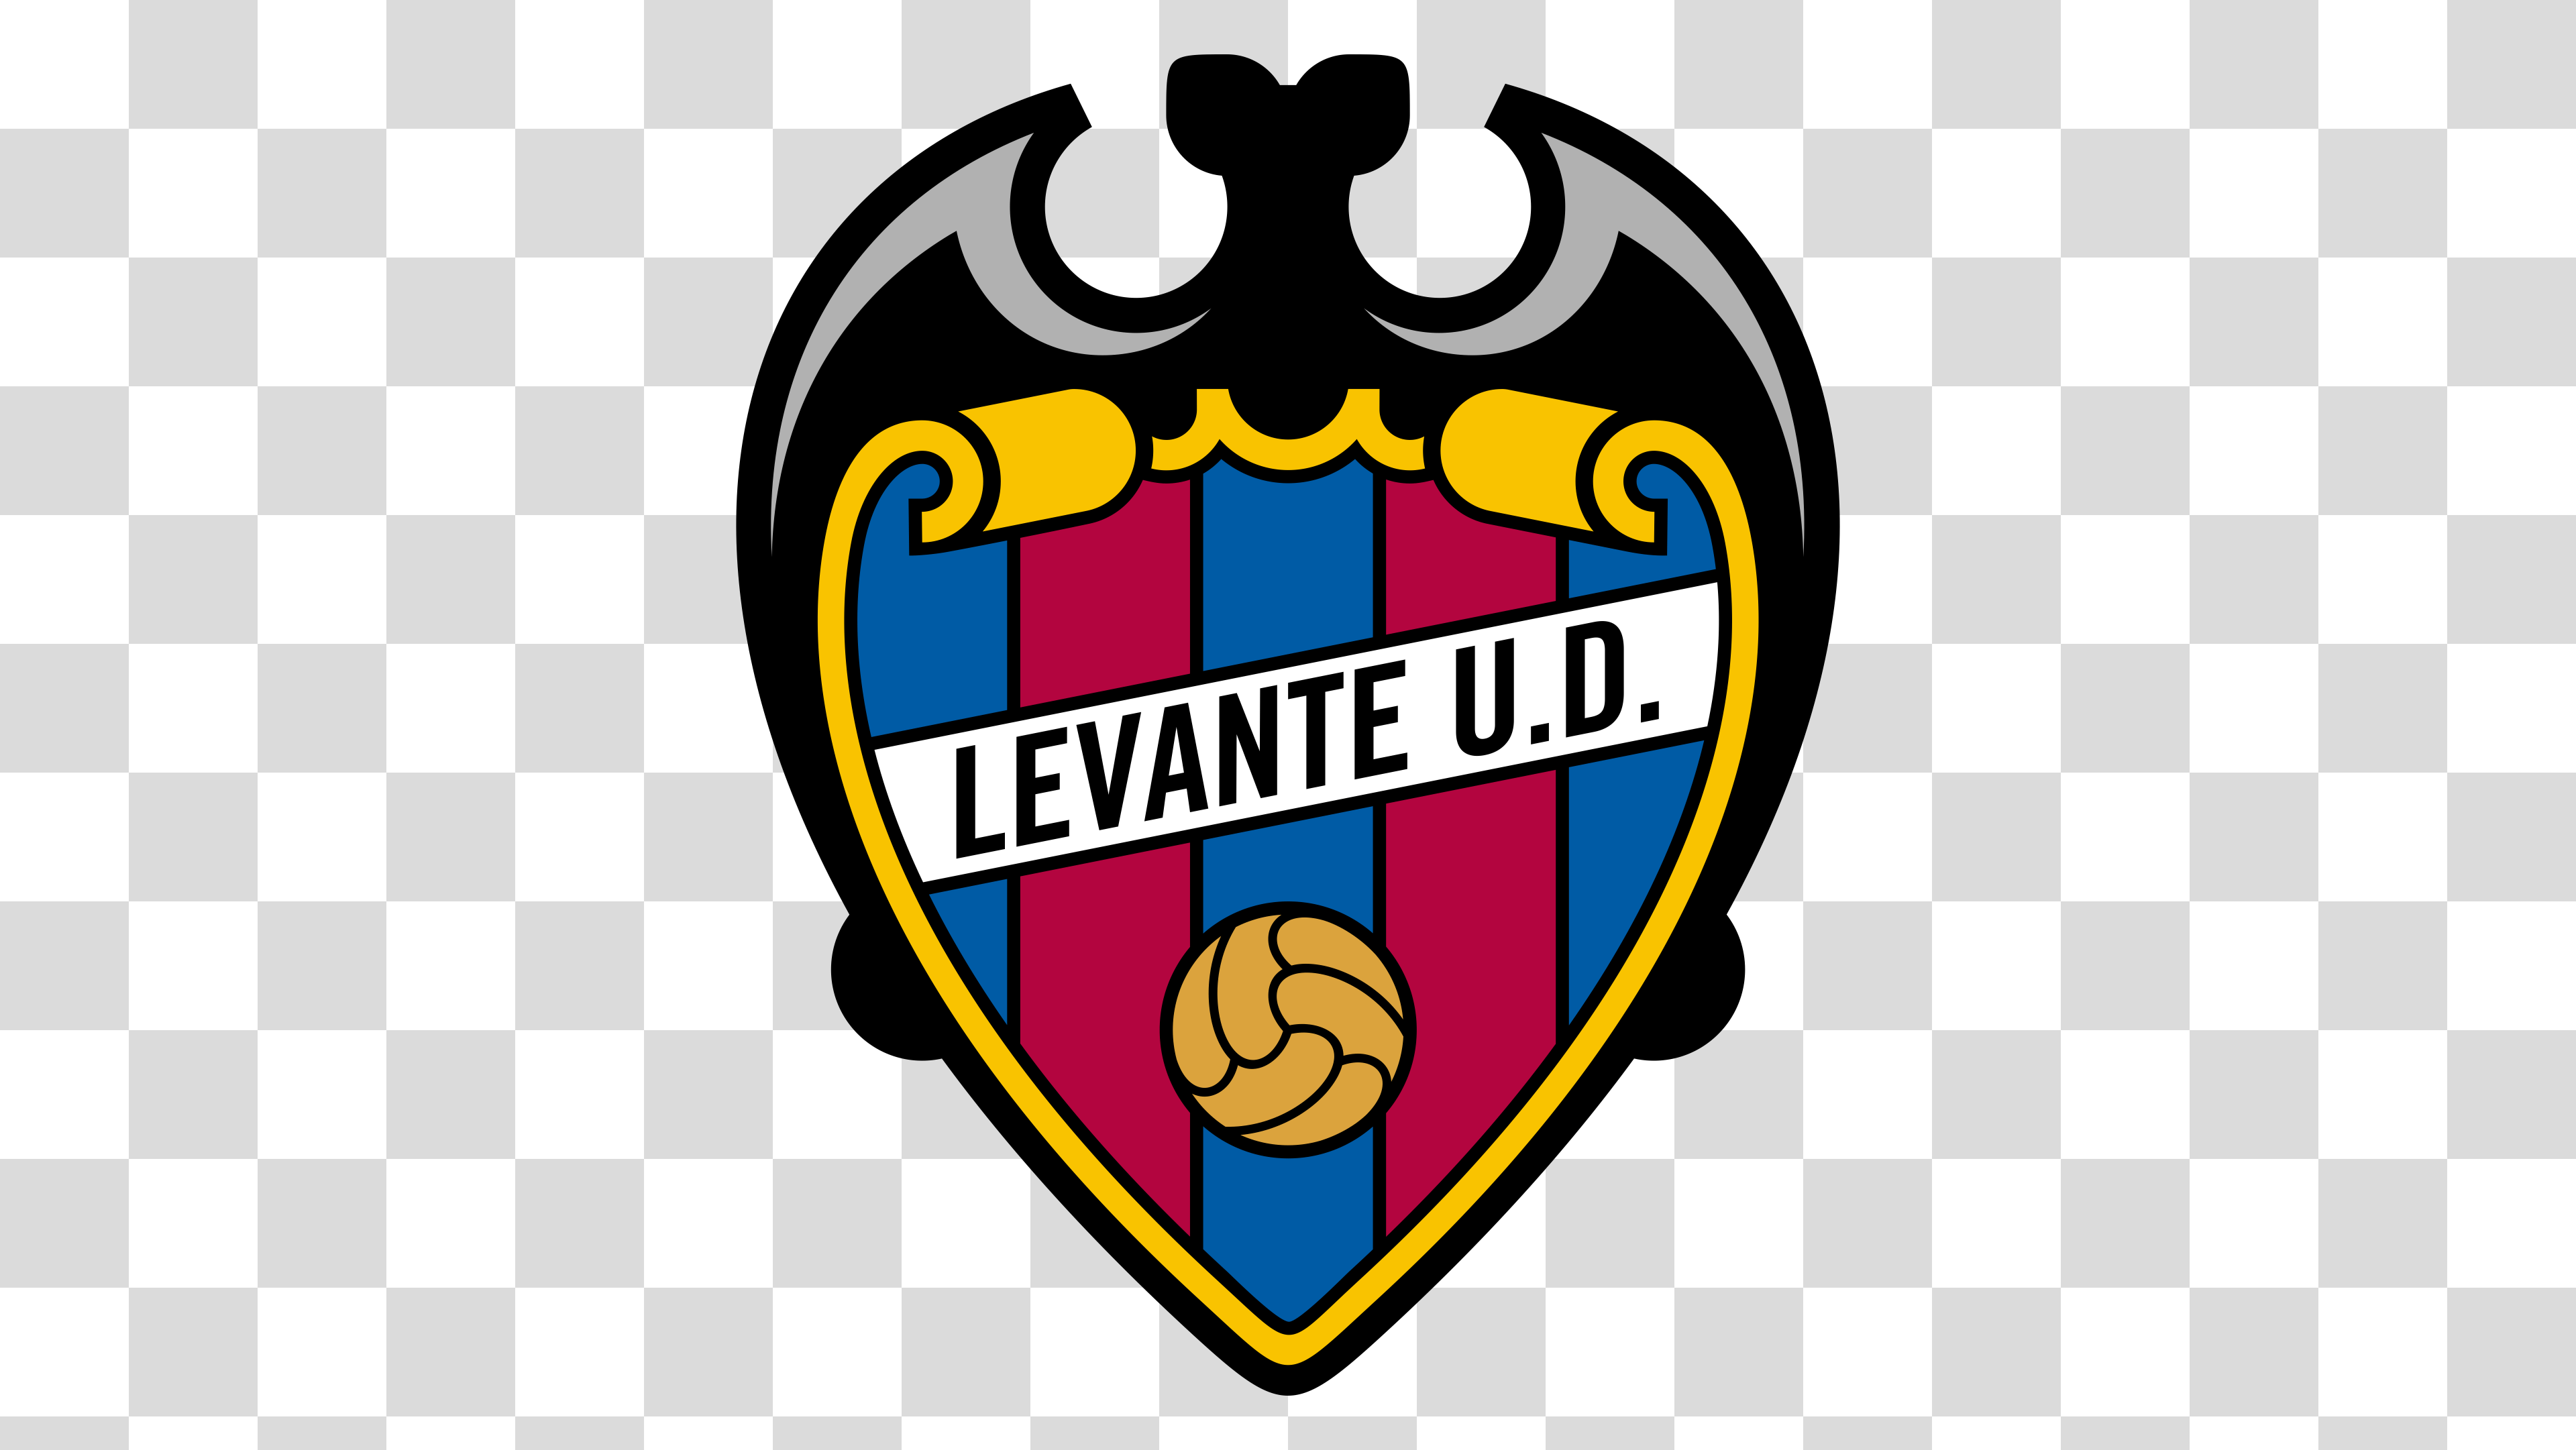 Levante UD Logo PNG Transparent Image